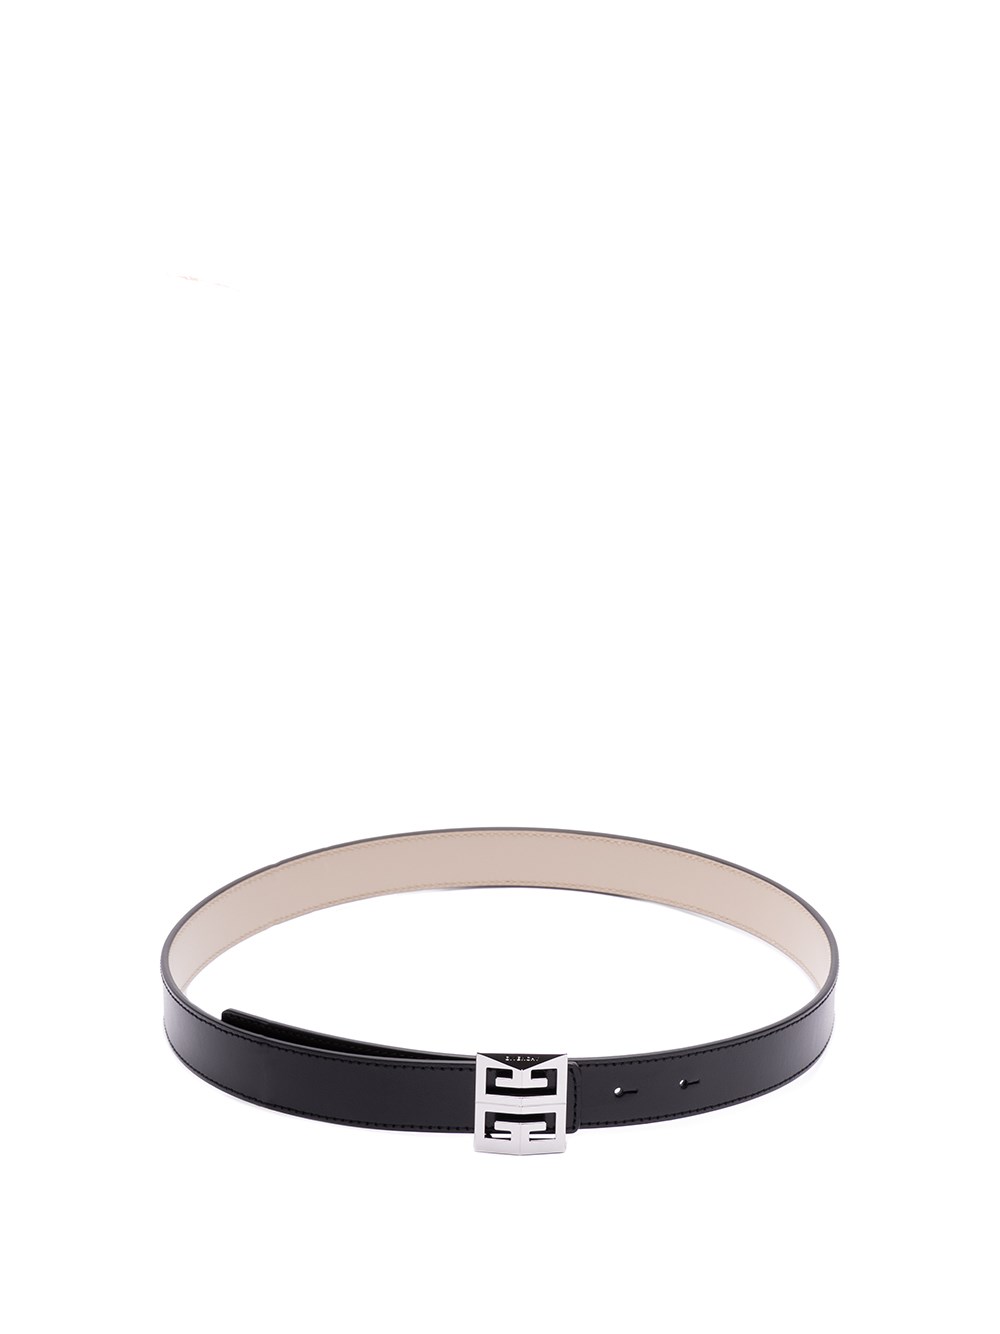 Givenchy `4g` Reversible Belt In Black  